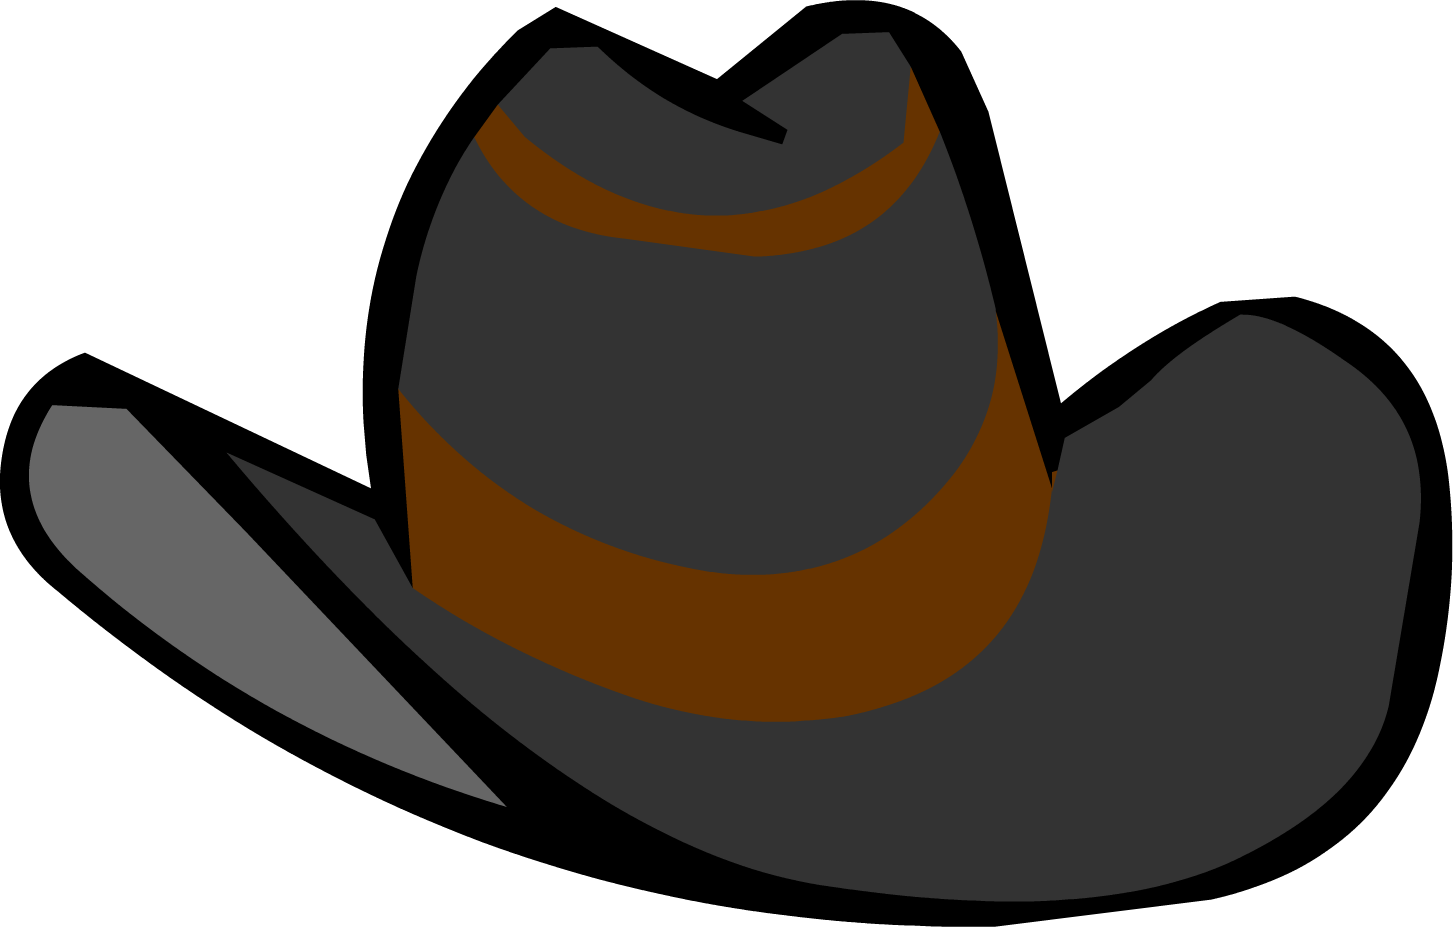 Black Cowboy Hat - Club Penguin Wiki - The free, editable ...